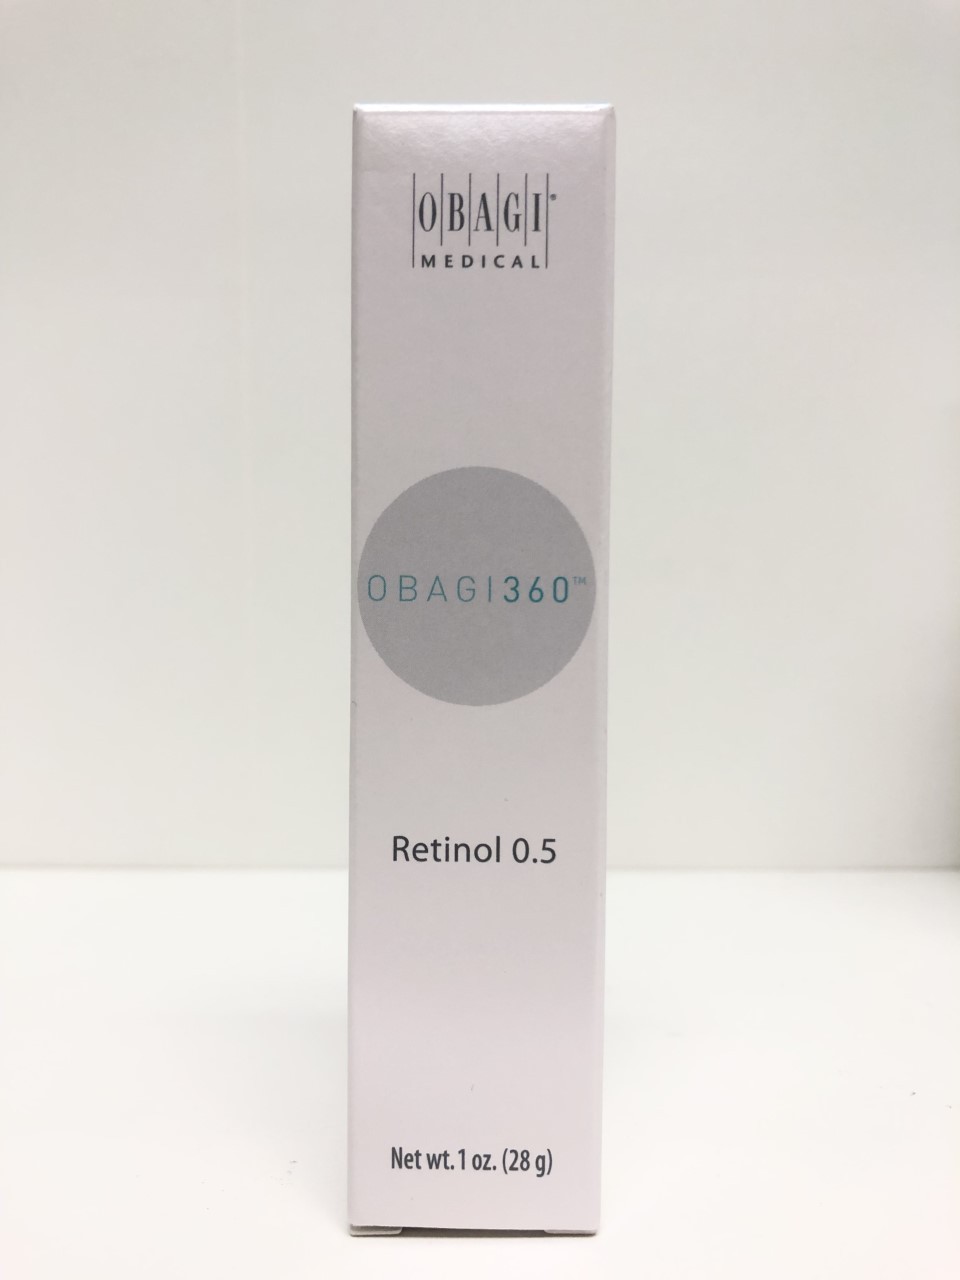 OBAGI RETINOL 0.5 1 oz Brand New in Box - $18.00